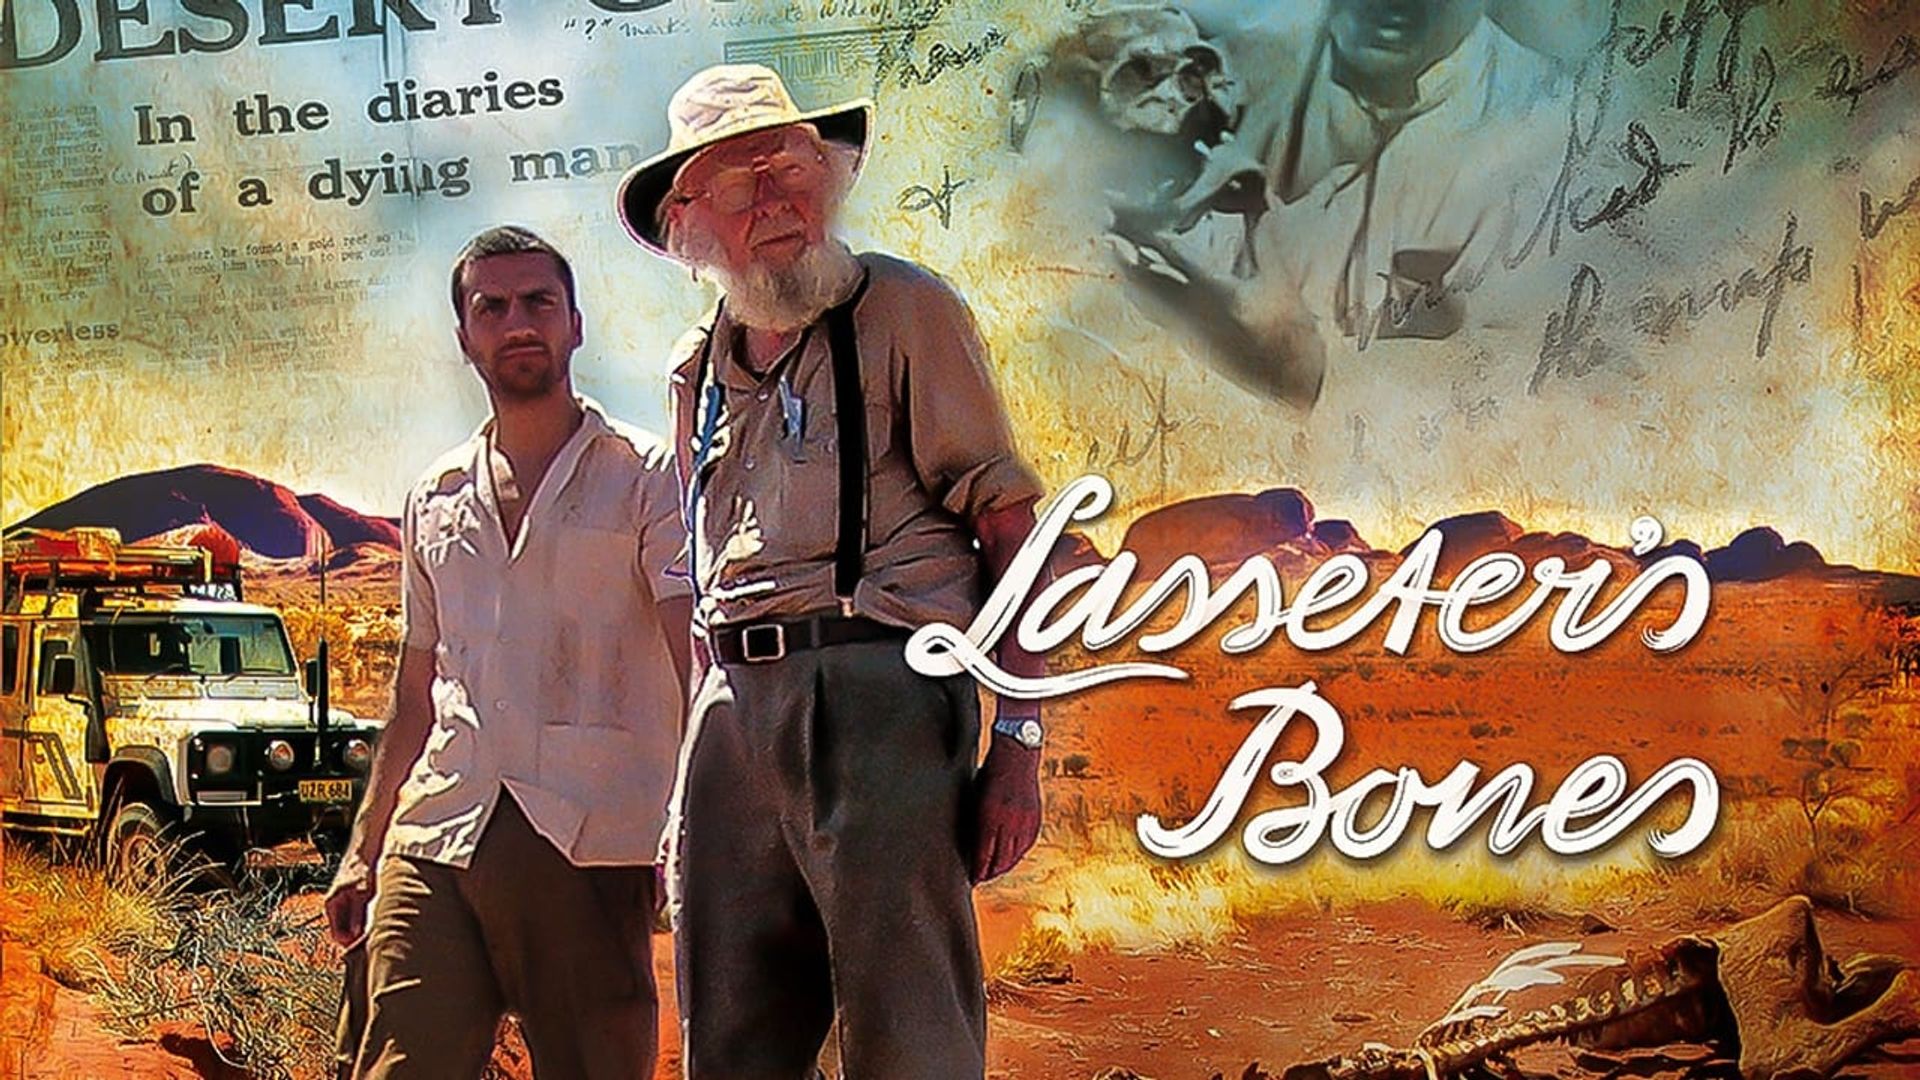 Australia's Lost Gold: The Legend of Lasseter background